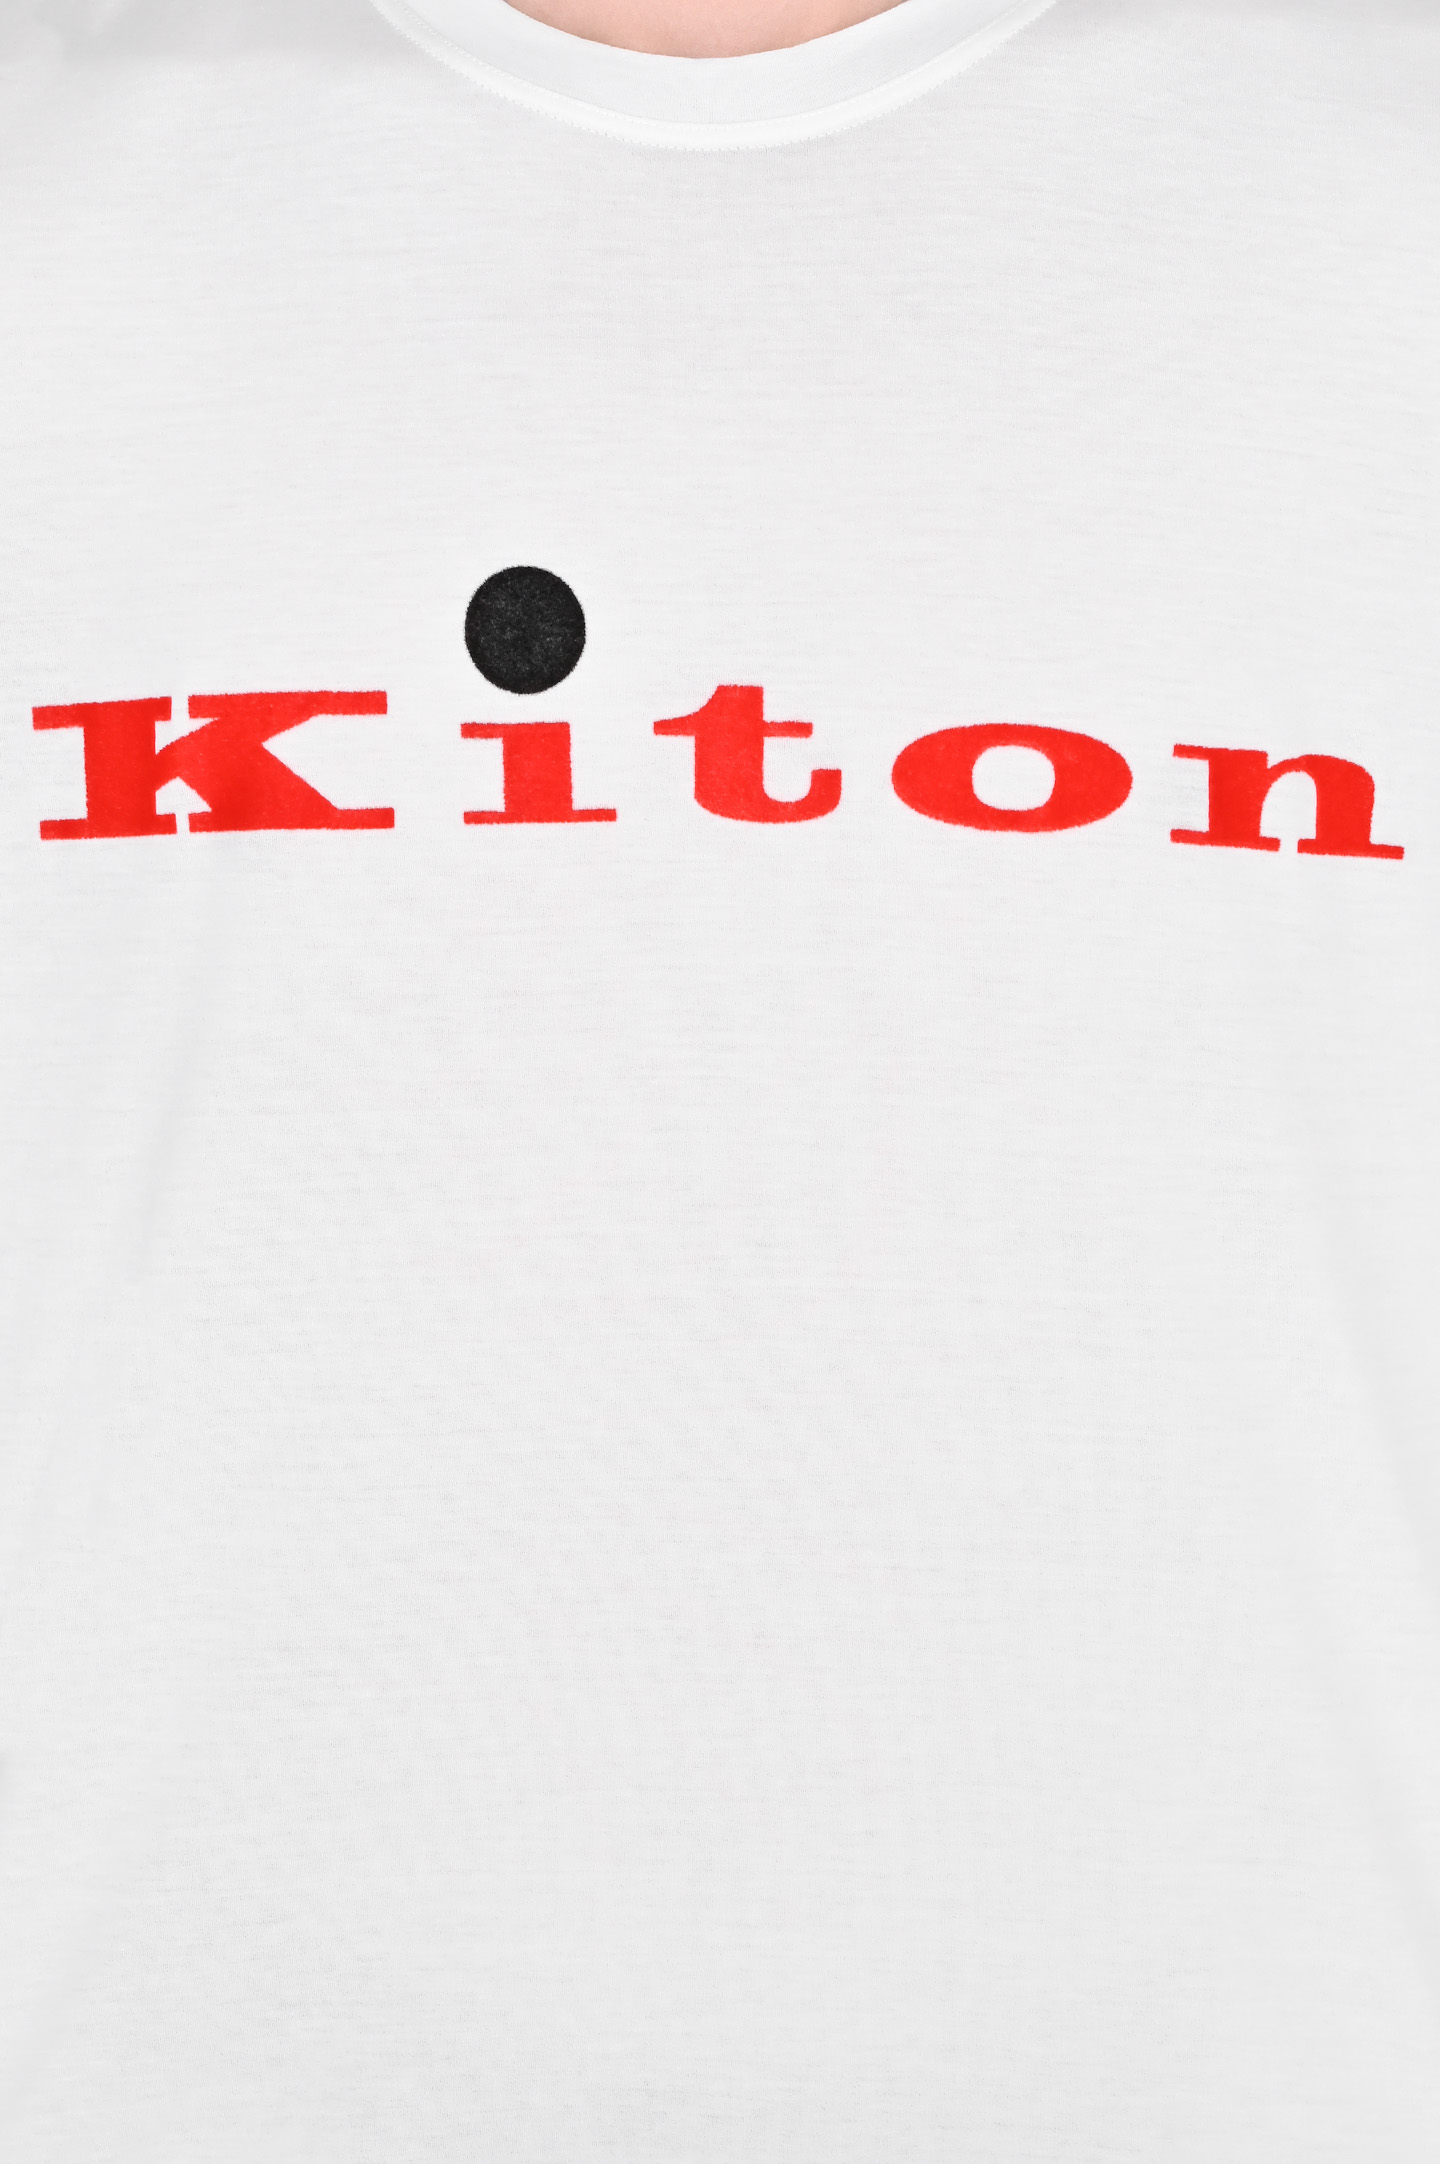 Футболка KITON UK1164E23, цвет: Белый, Мужской